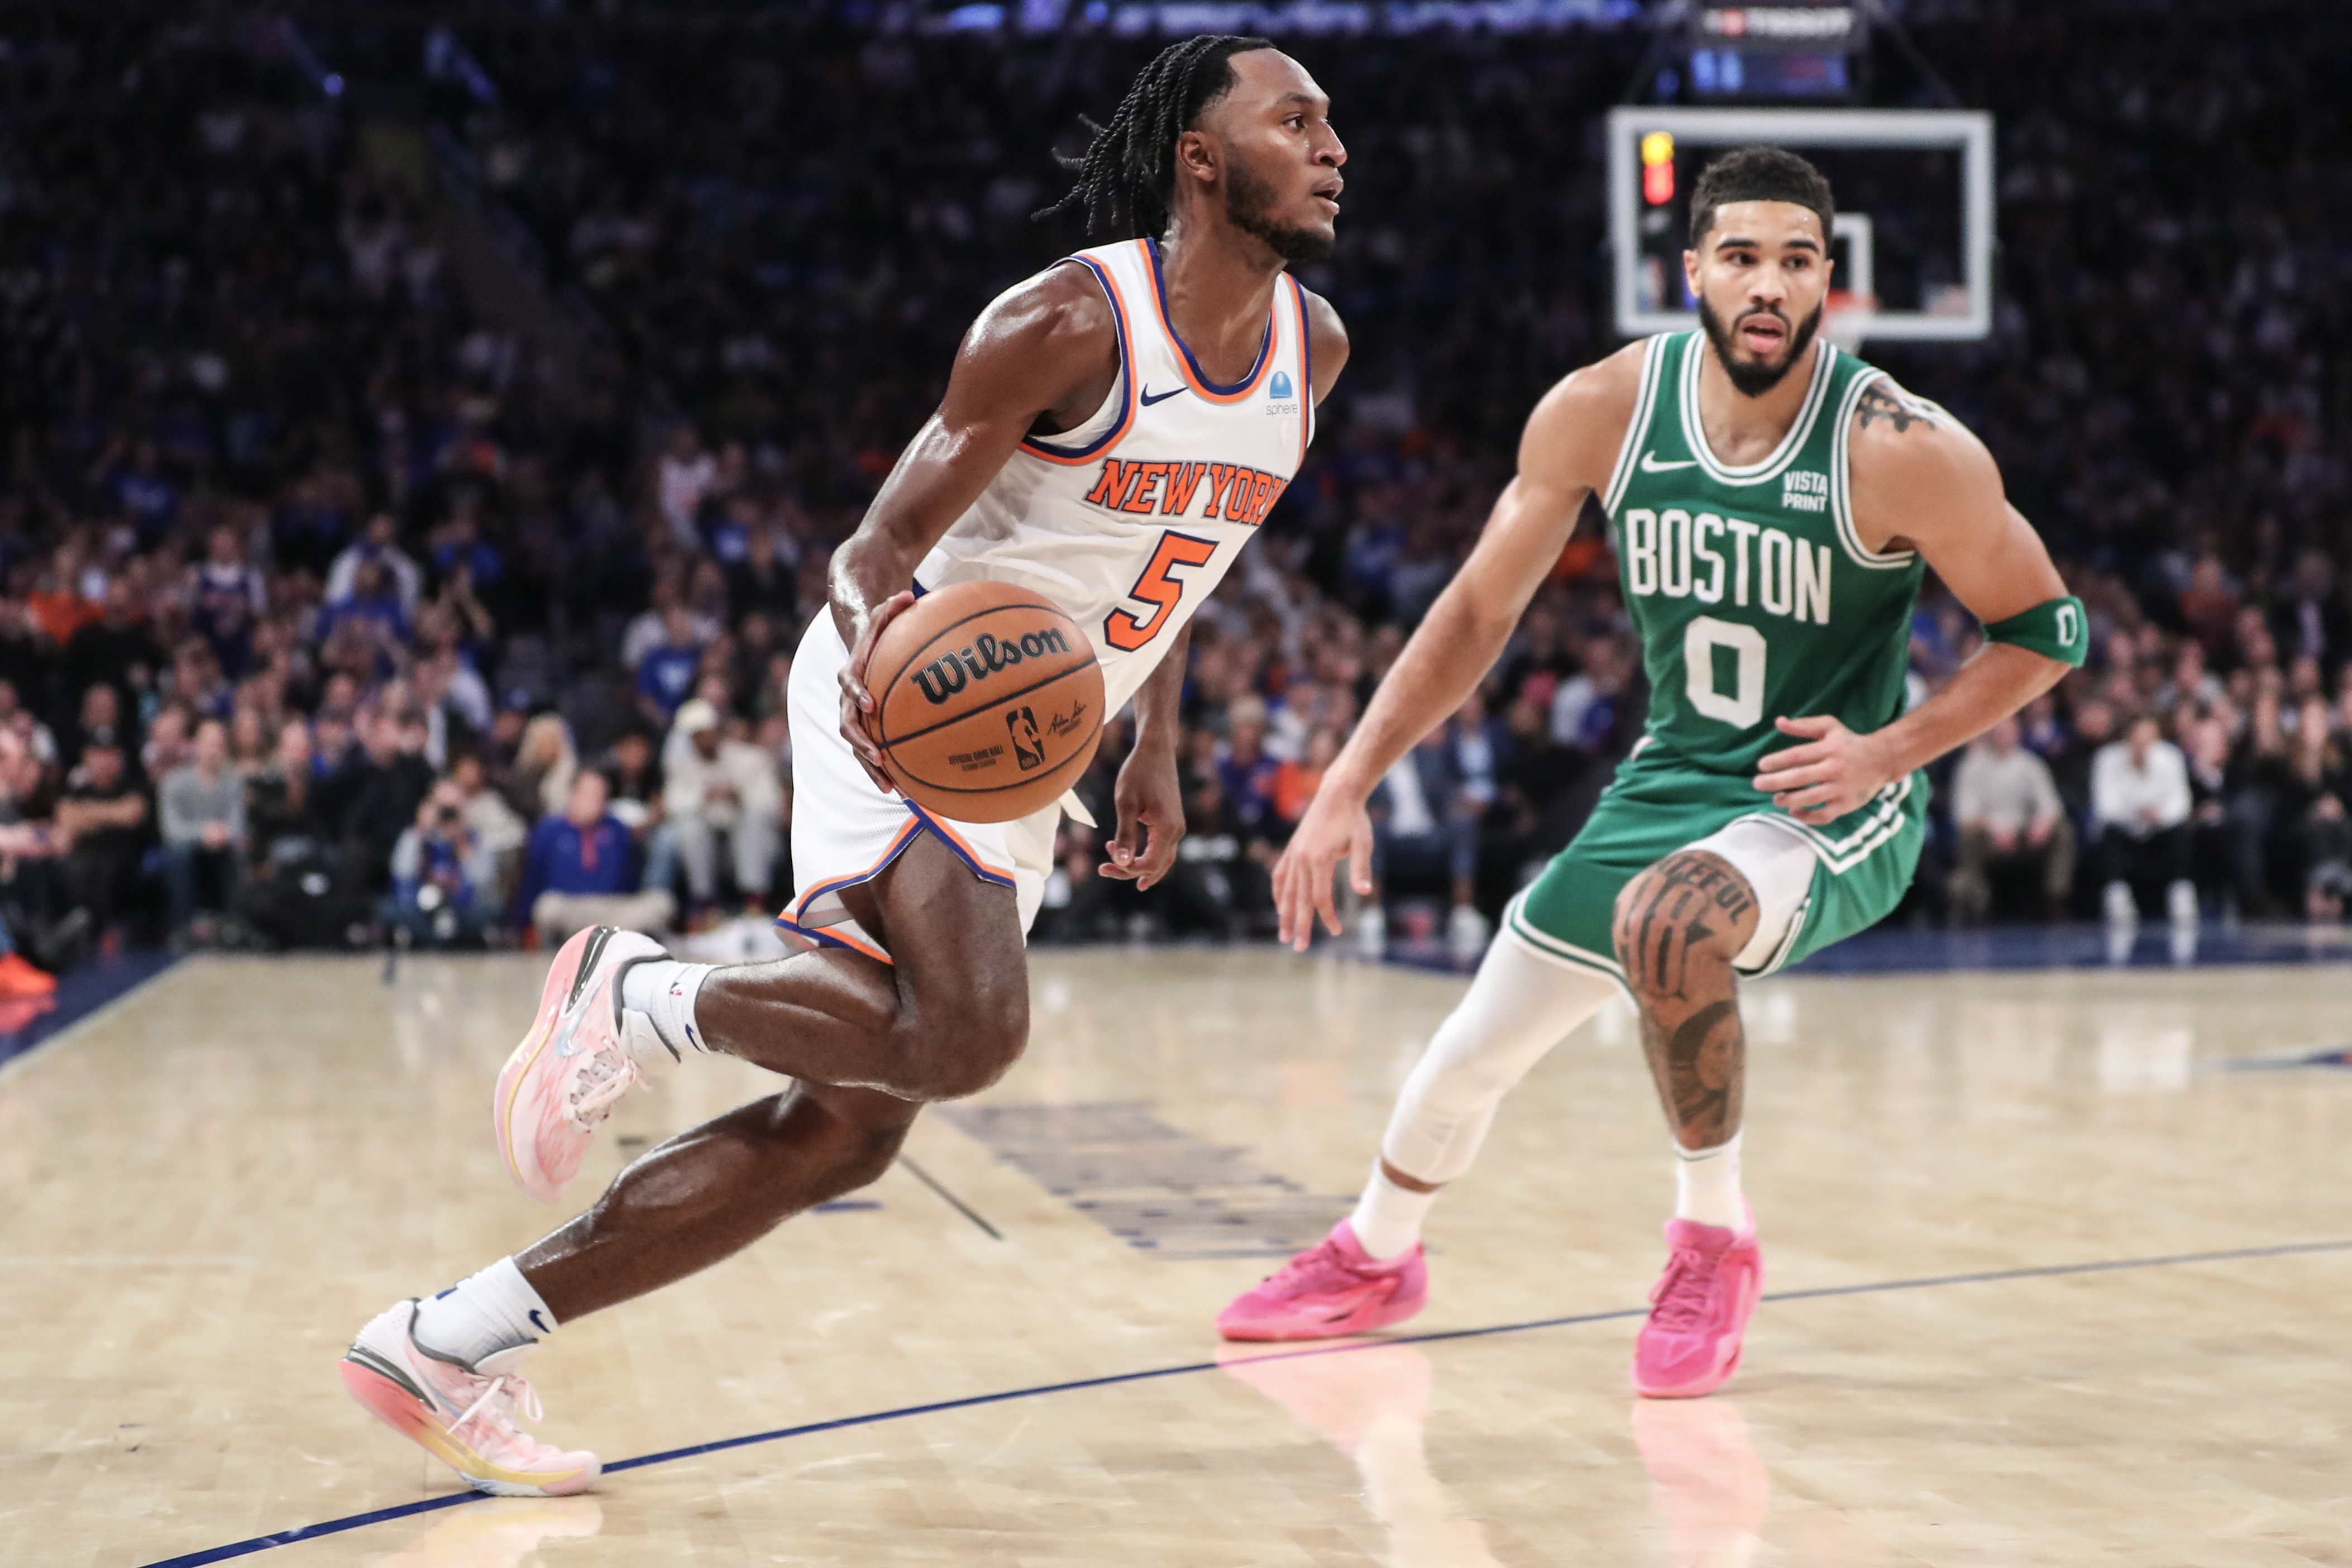 New York Knicks guard Immanuel Quickley (5) looks to drive past Boston Celtics forward Jayson Tatum (0) in the fourth quarter at Madison Square Garden